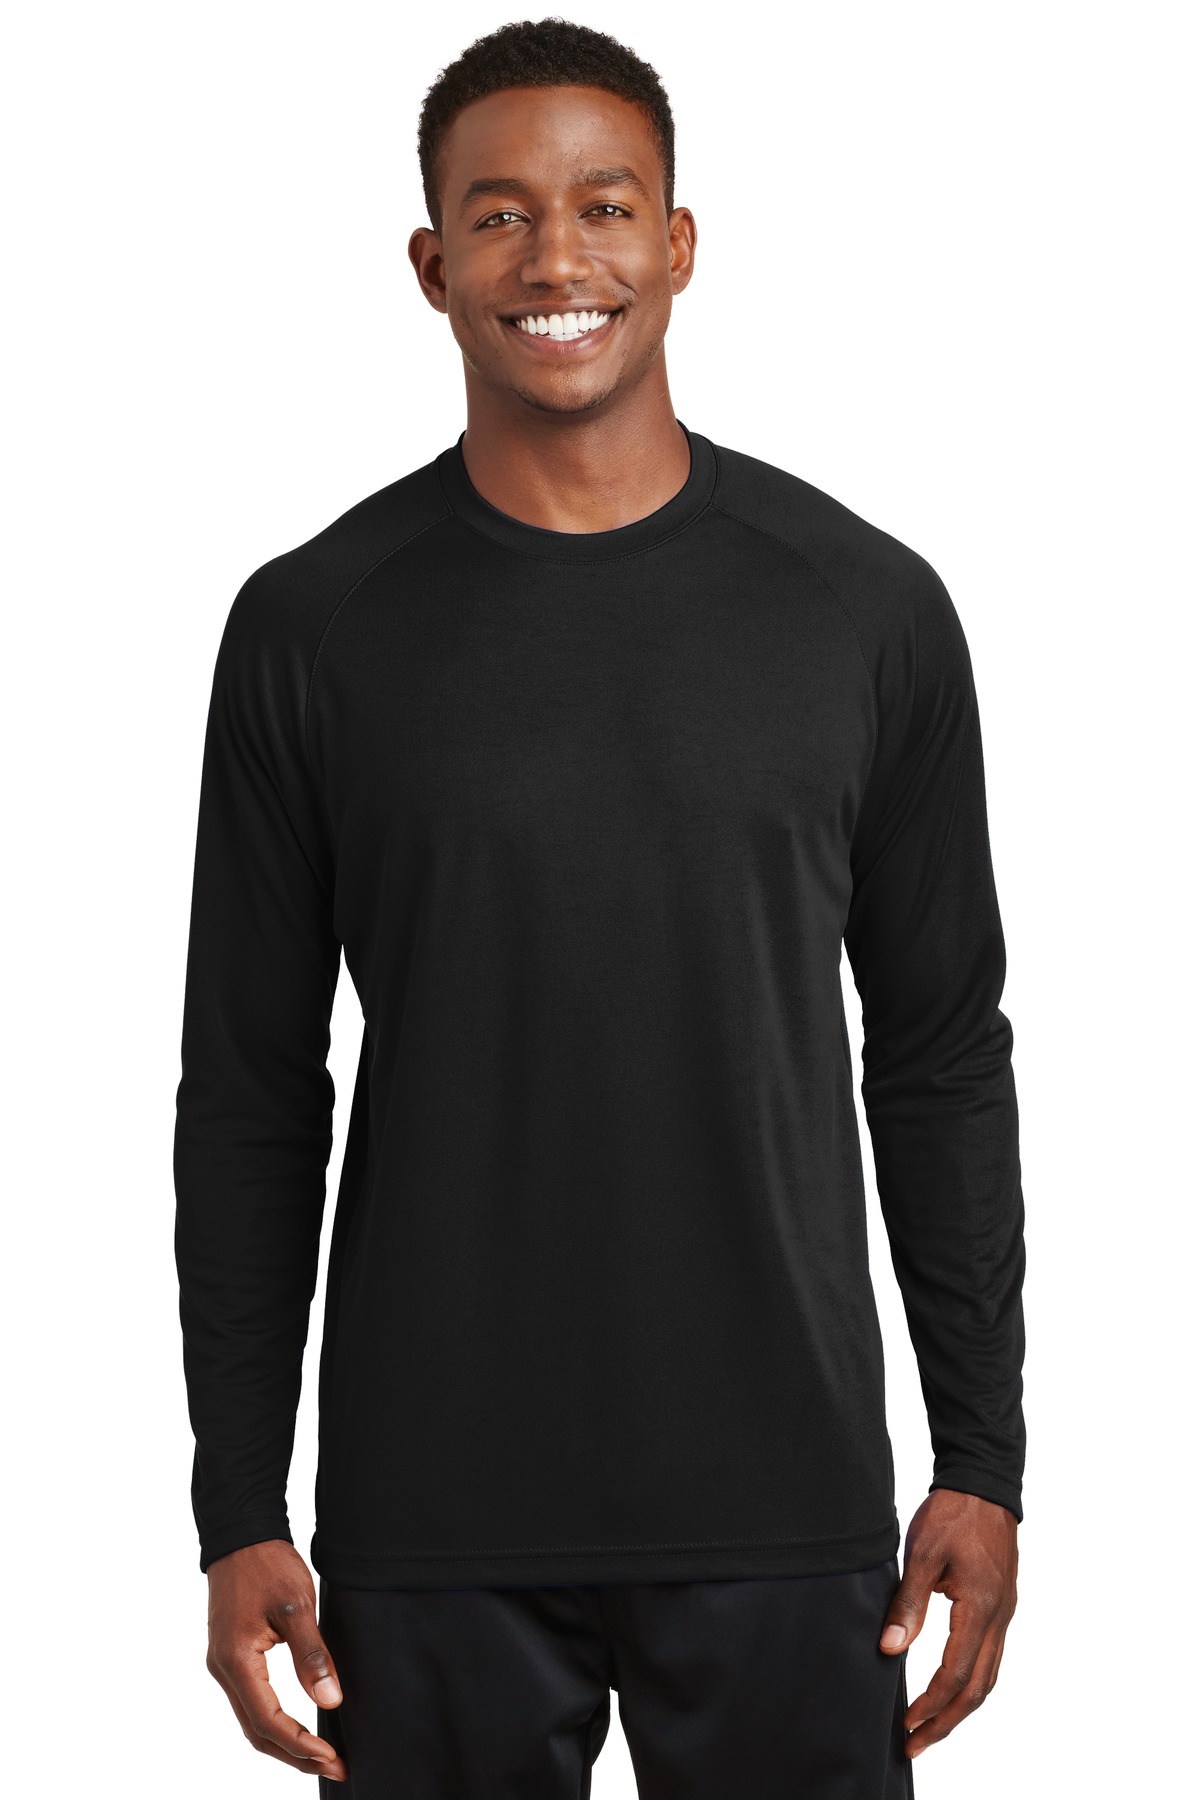 Sport-Tek Corporate Hospitality Activewear & TShirts ® Dry Zone® Long Sleeve Raglan T-Shirt.-Sport-Tek